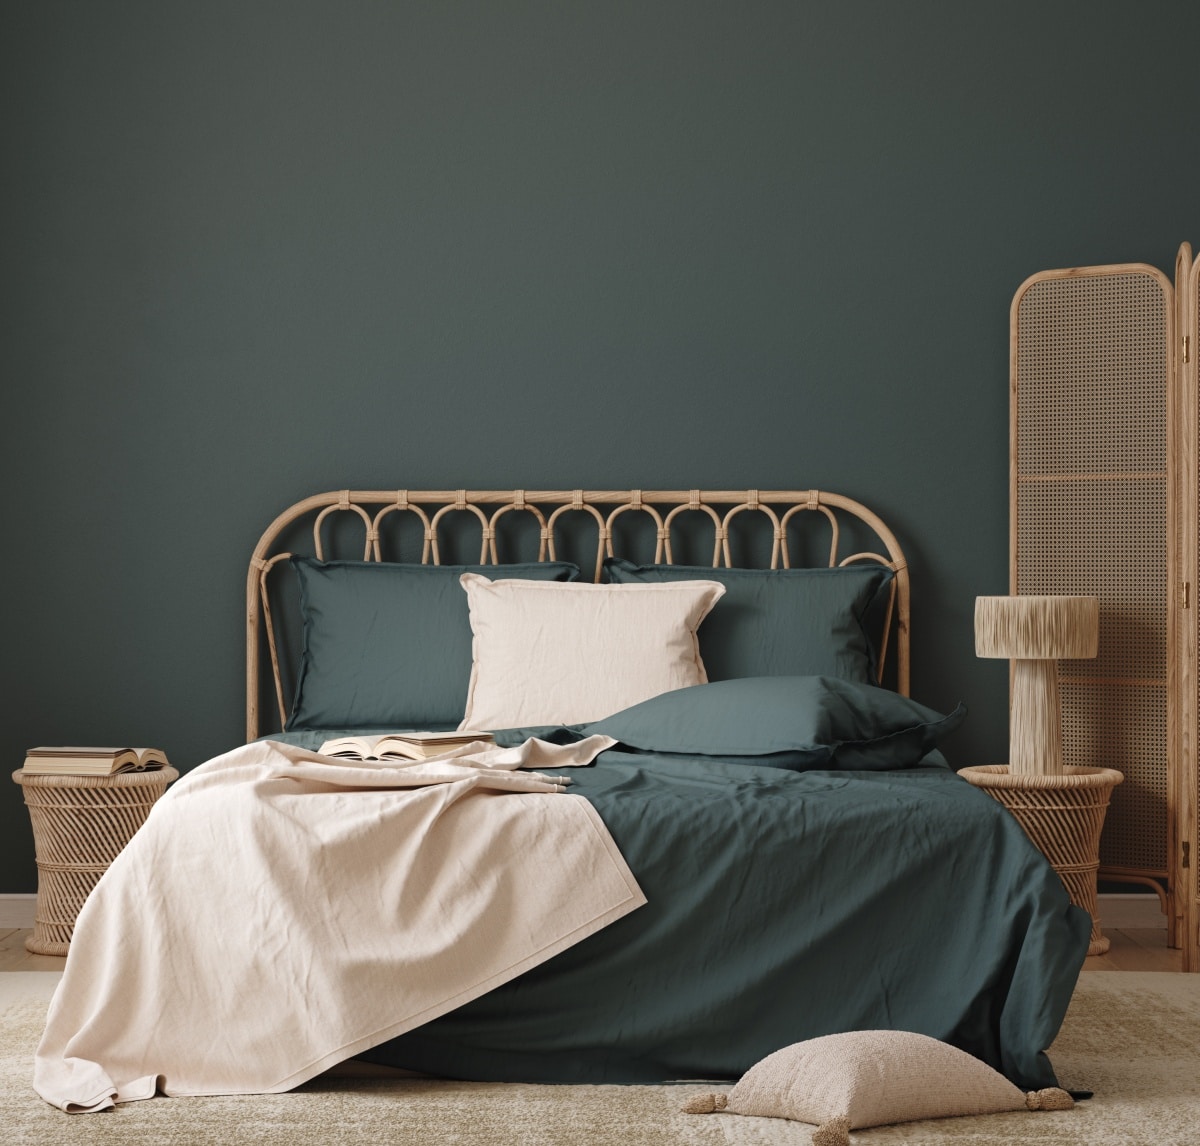 Dark blue-green bedroom interior with rattan furniture